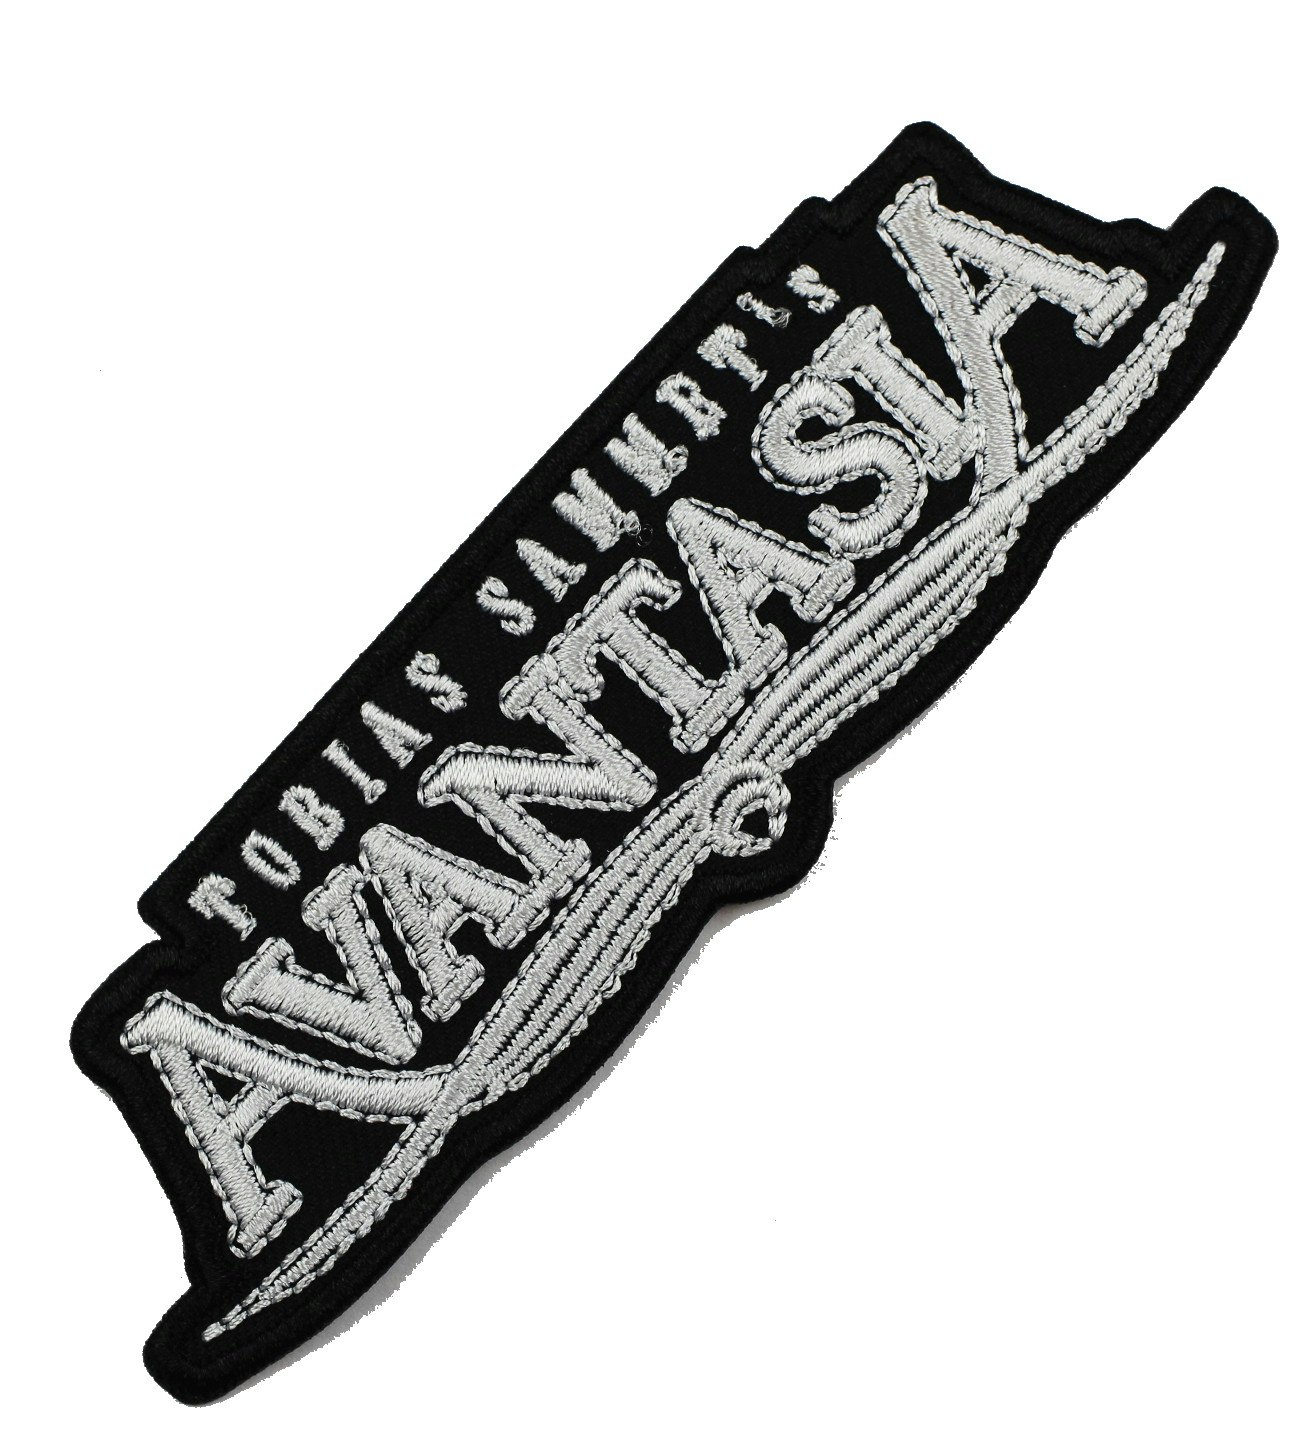 Avantasia logo patch